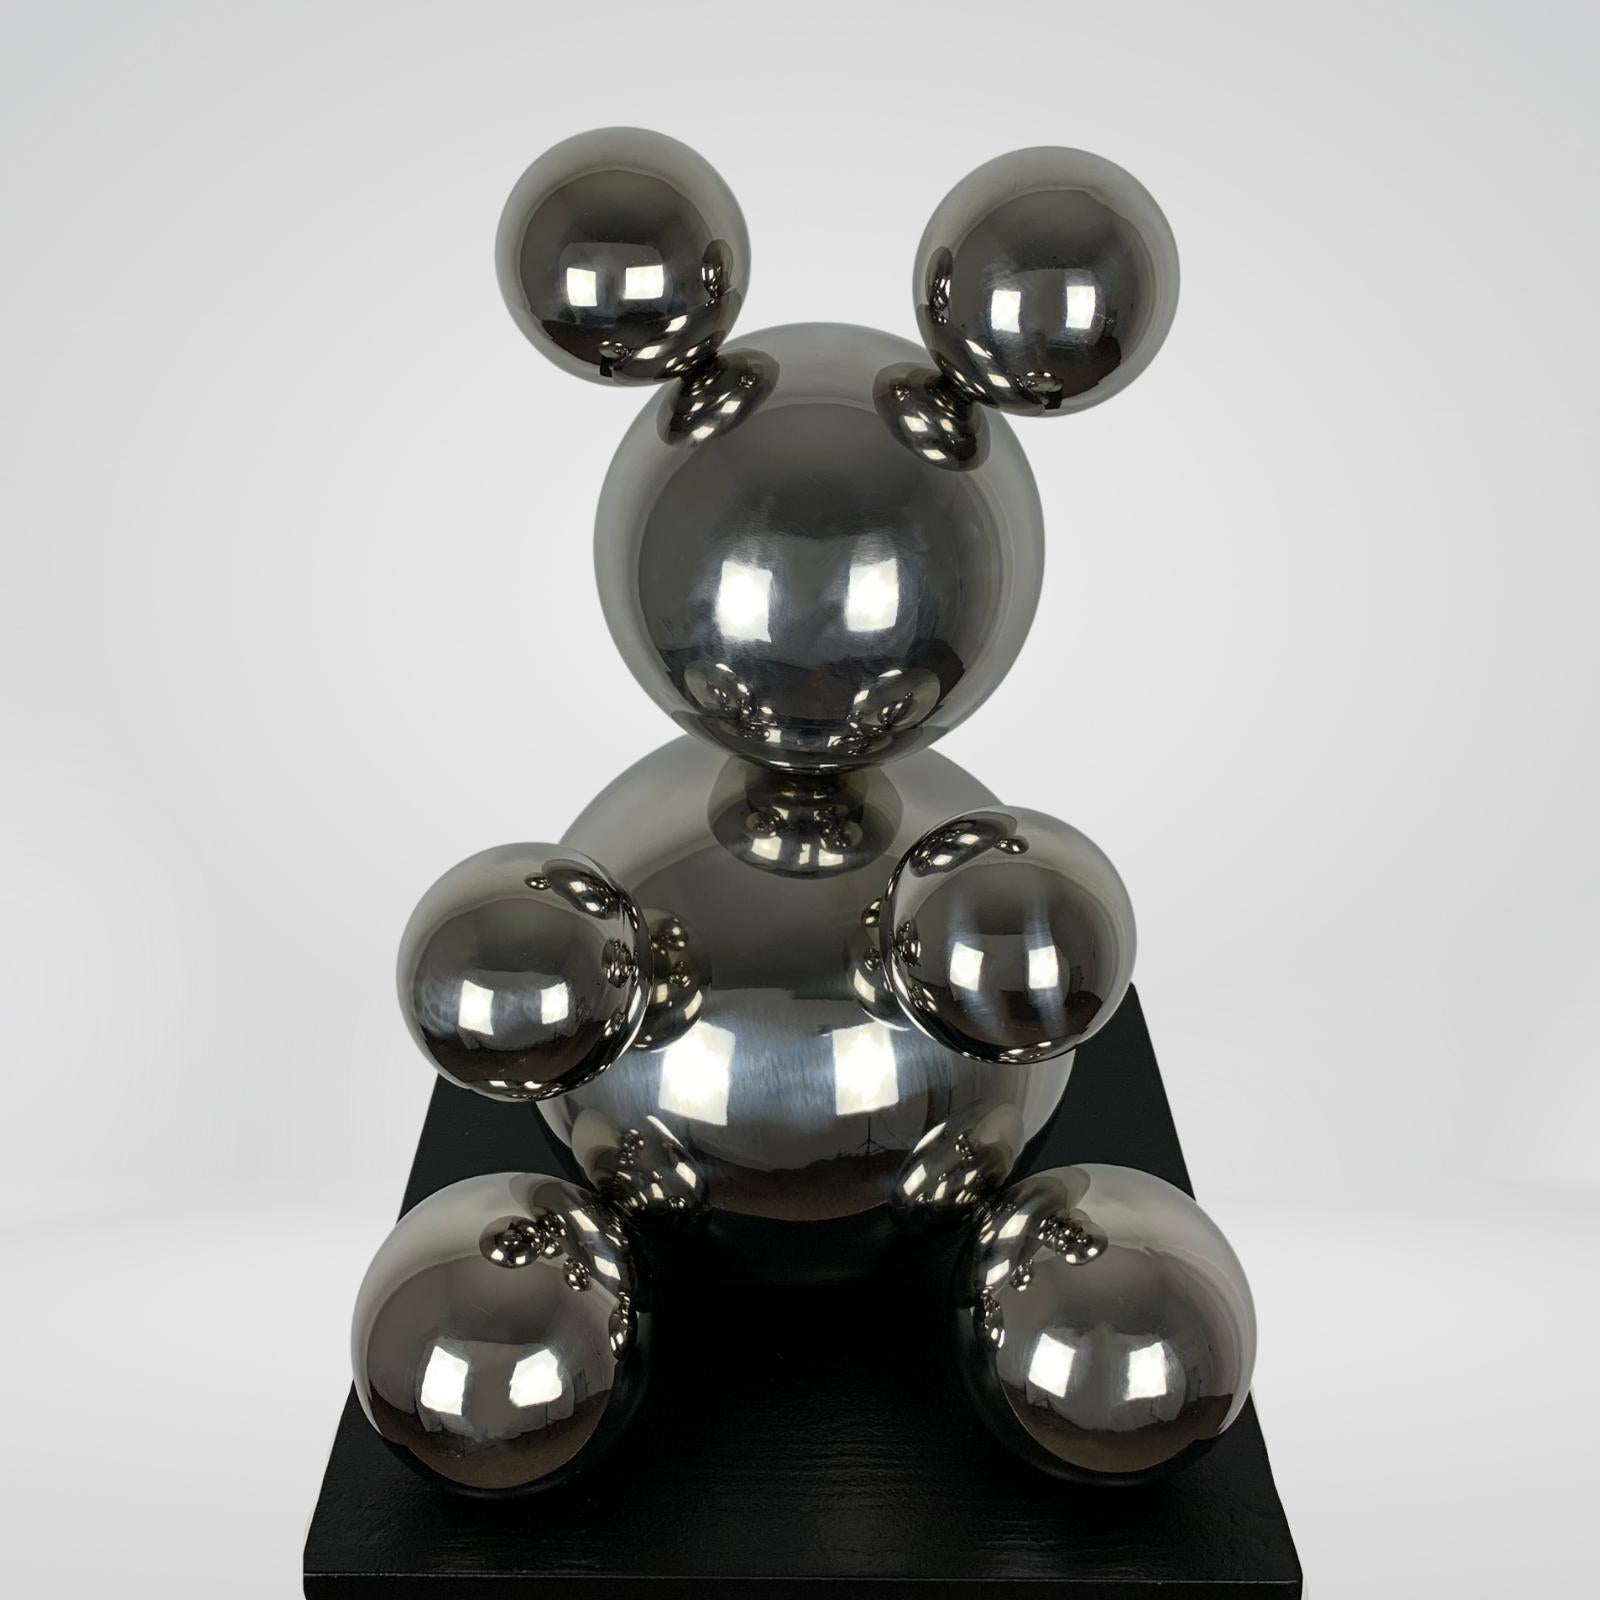 Big Stainless Steel Bear 'Inna' Sculpture Minimalistic Animal Art 4